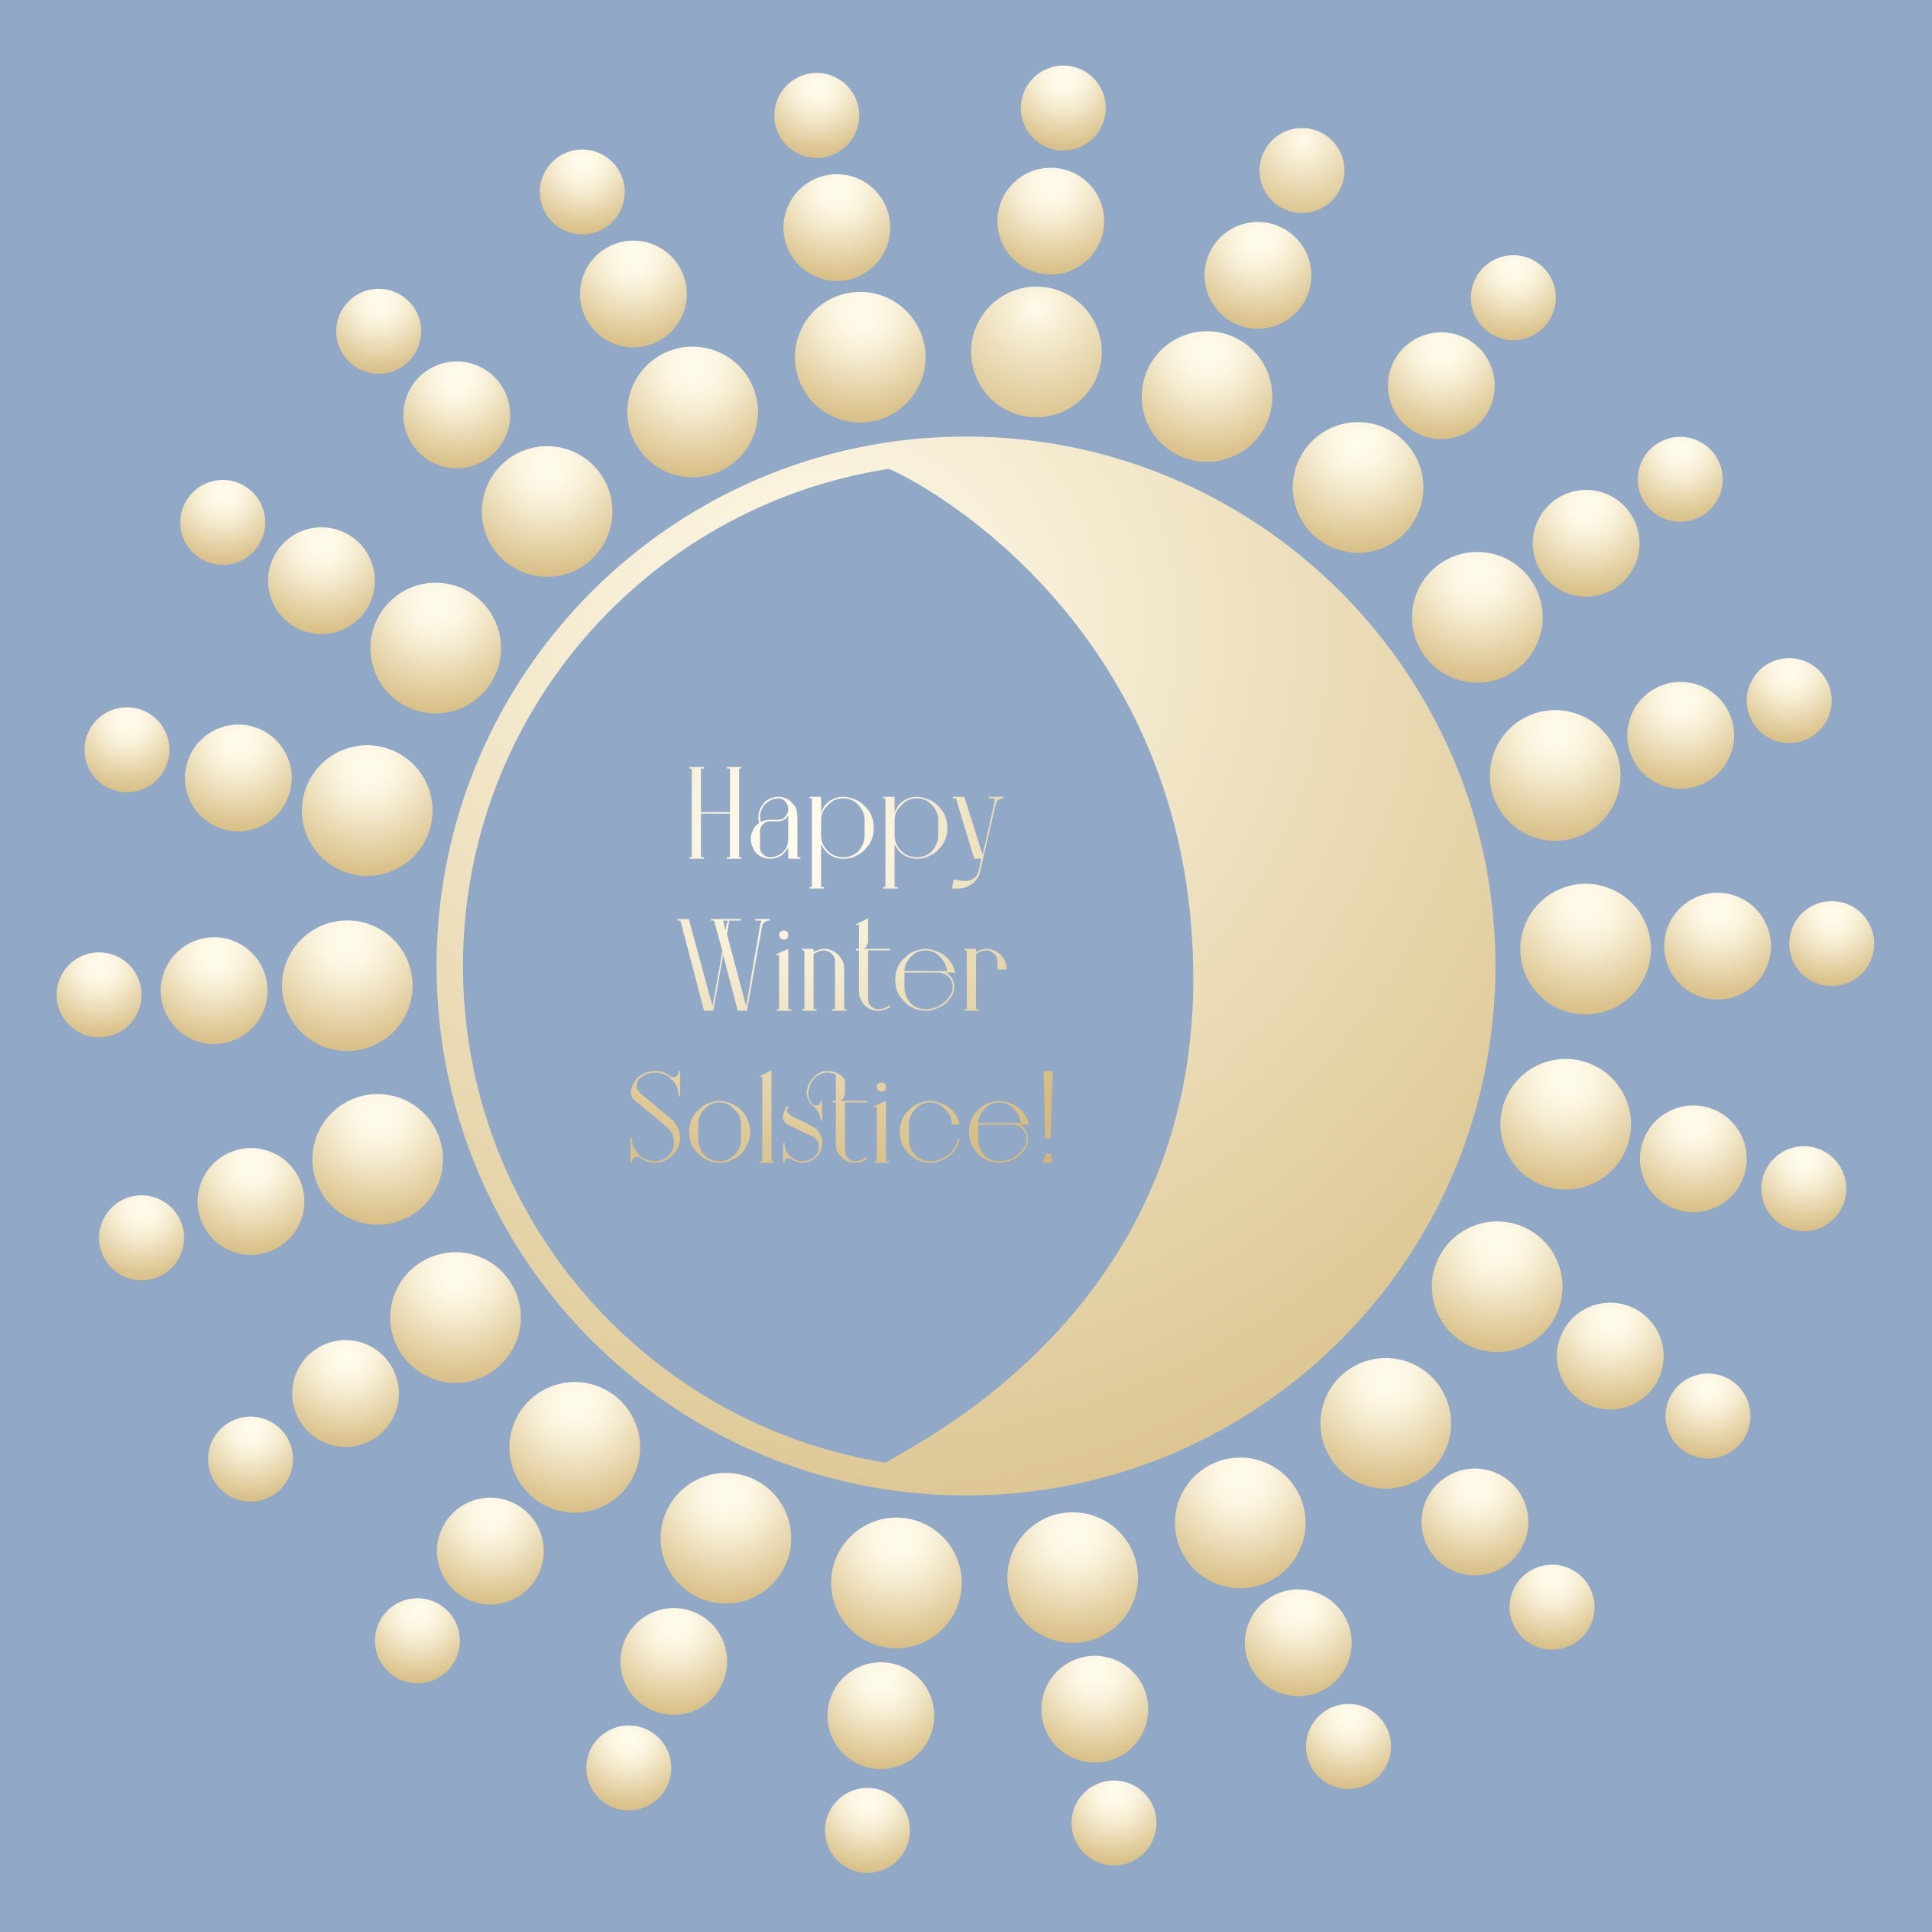 happy winter solstice images